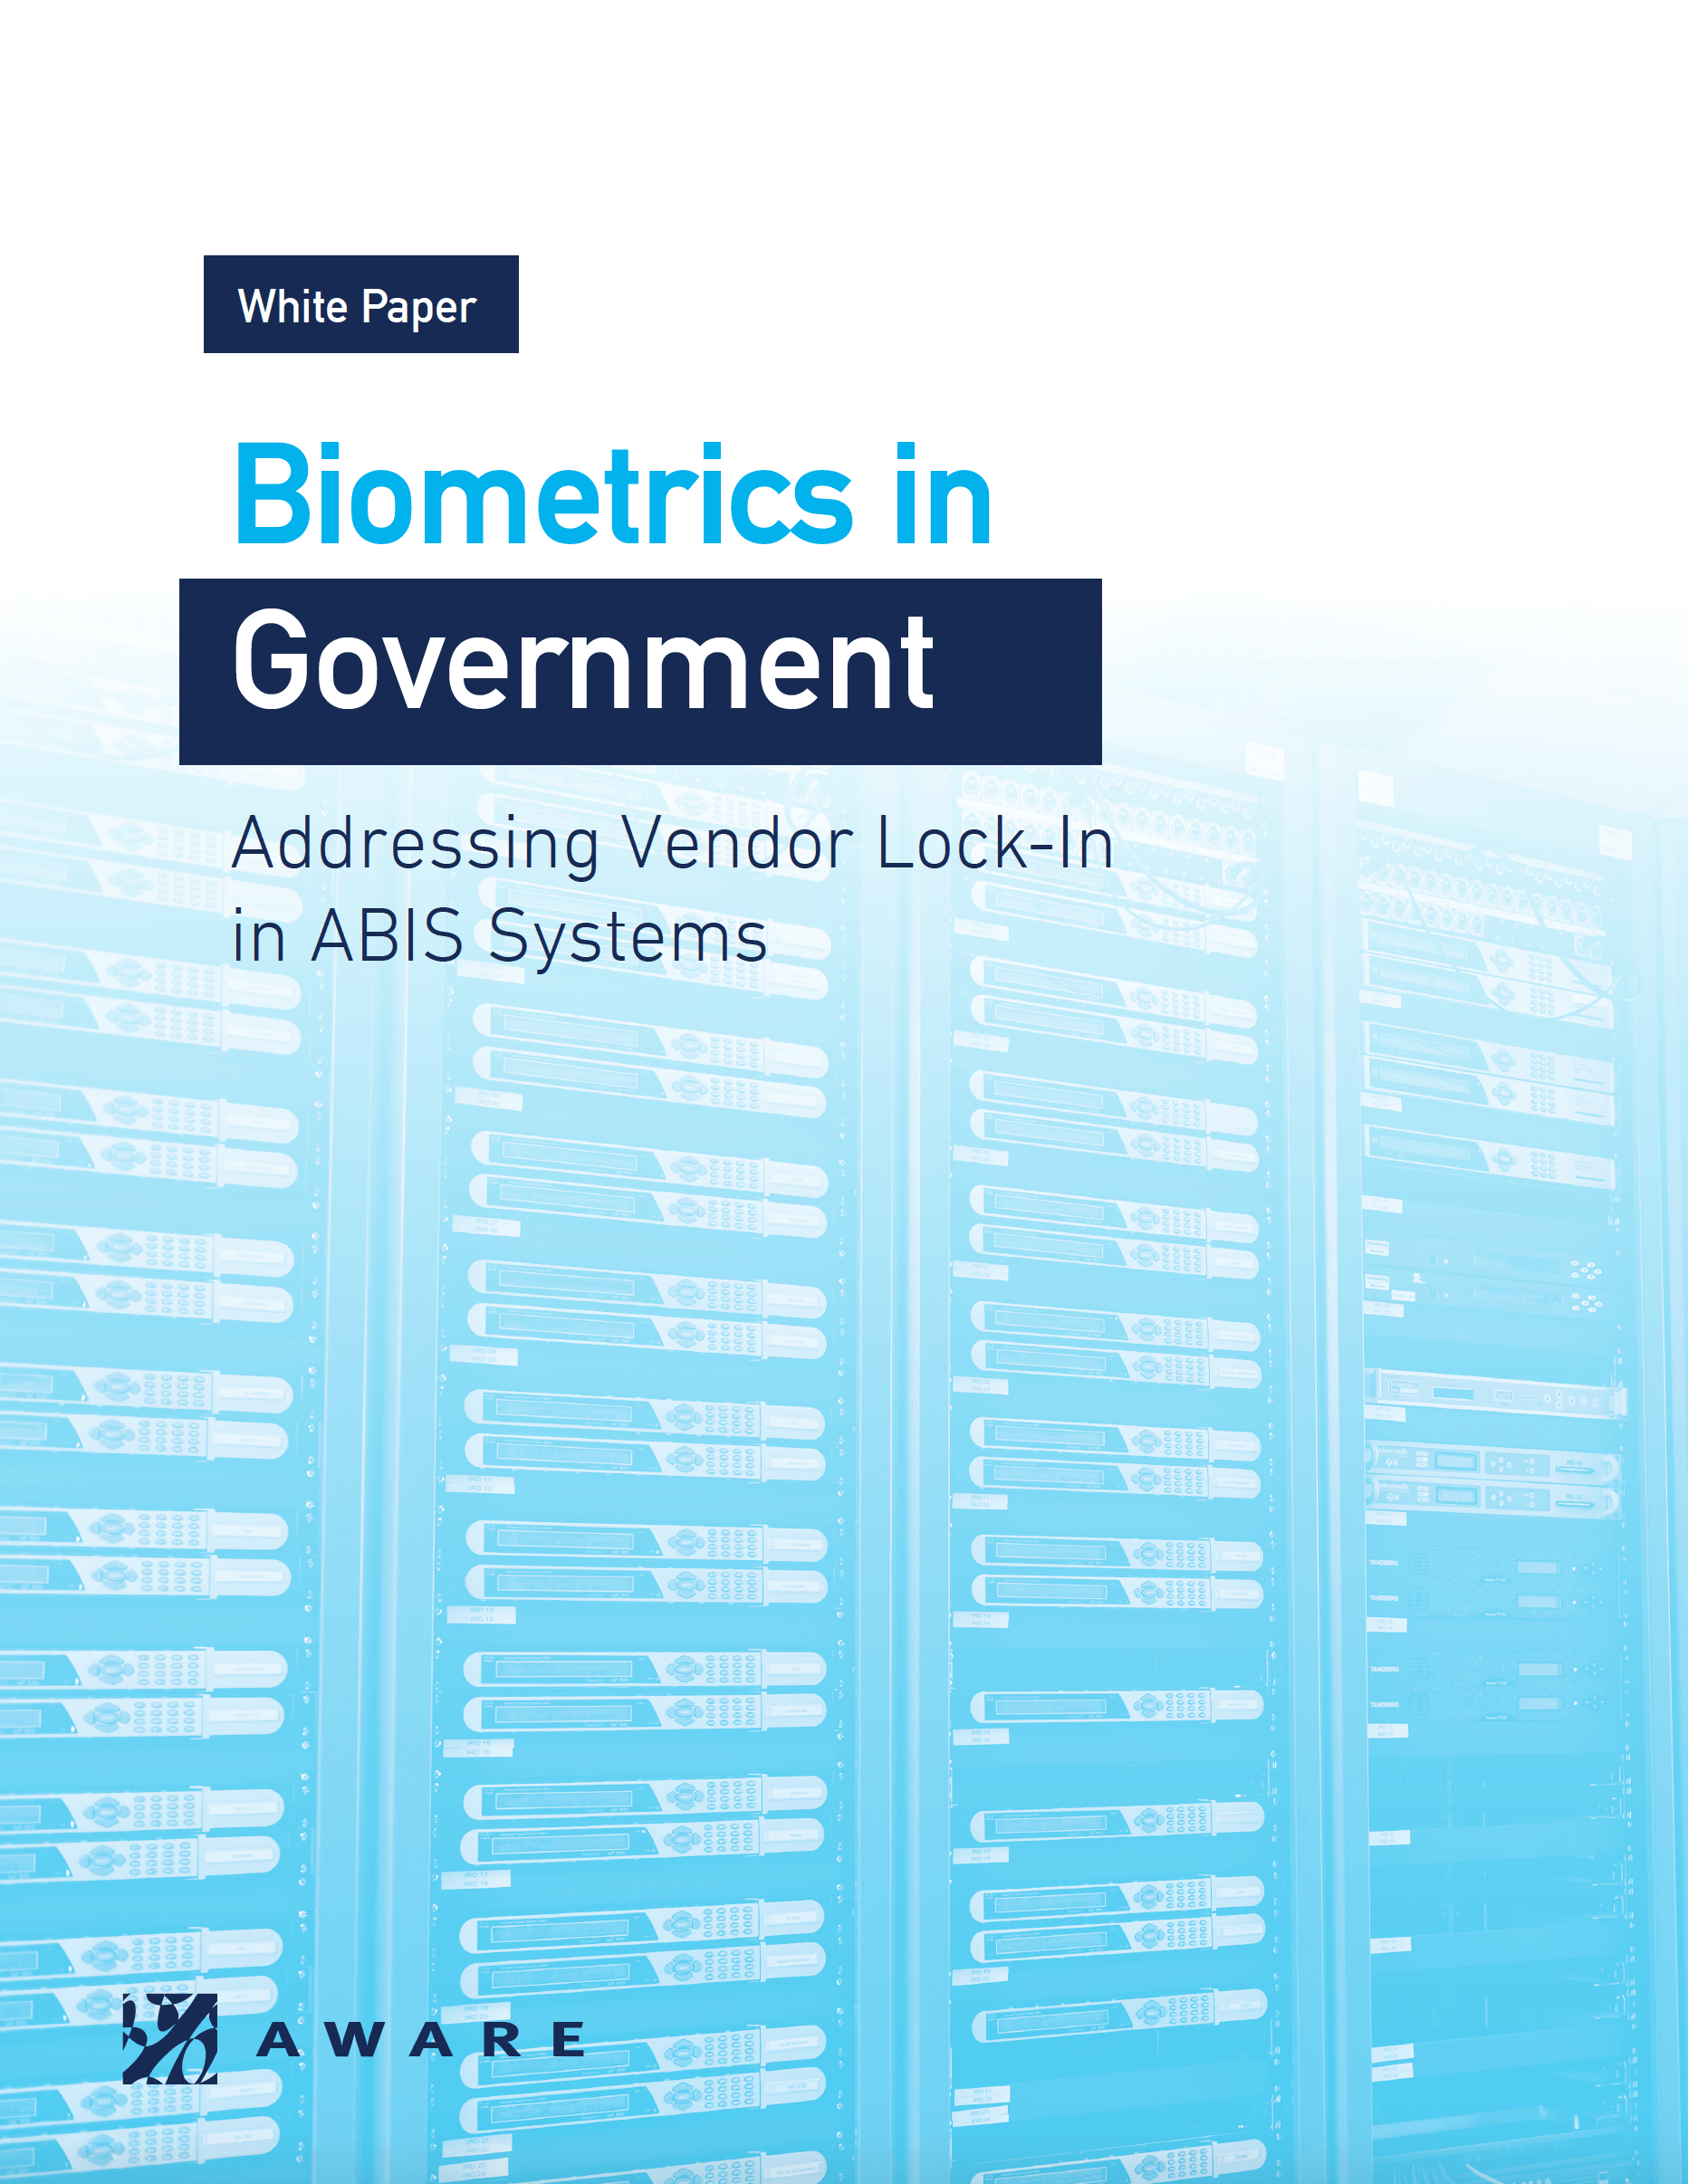 Biometrics in Government - Addressing Vendor Lock-in